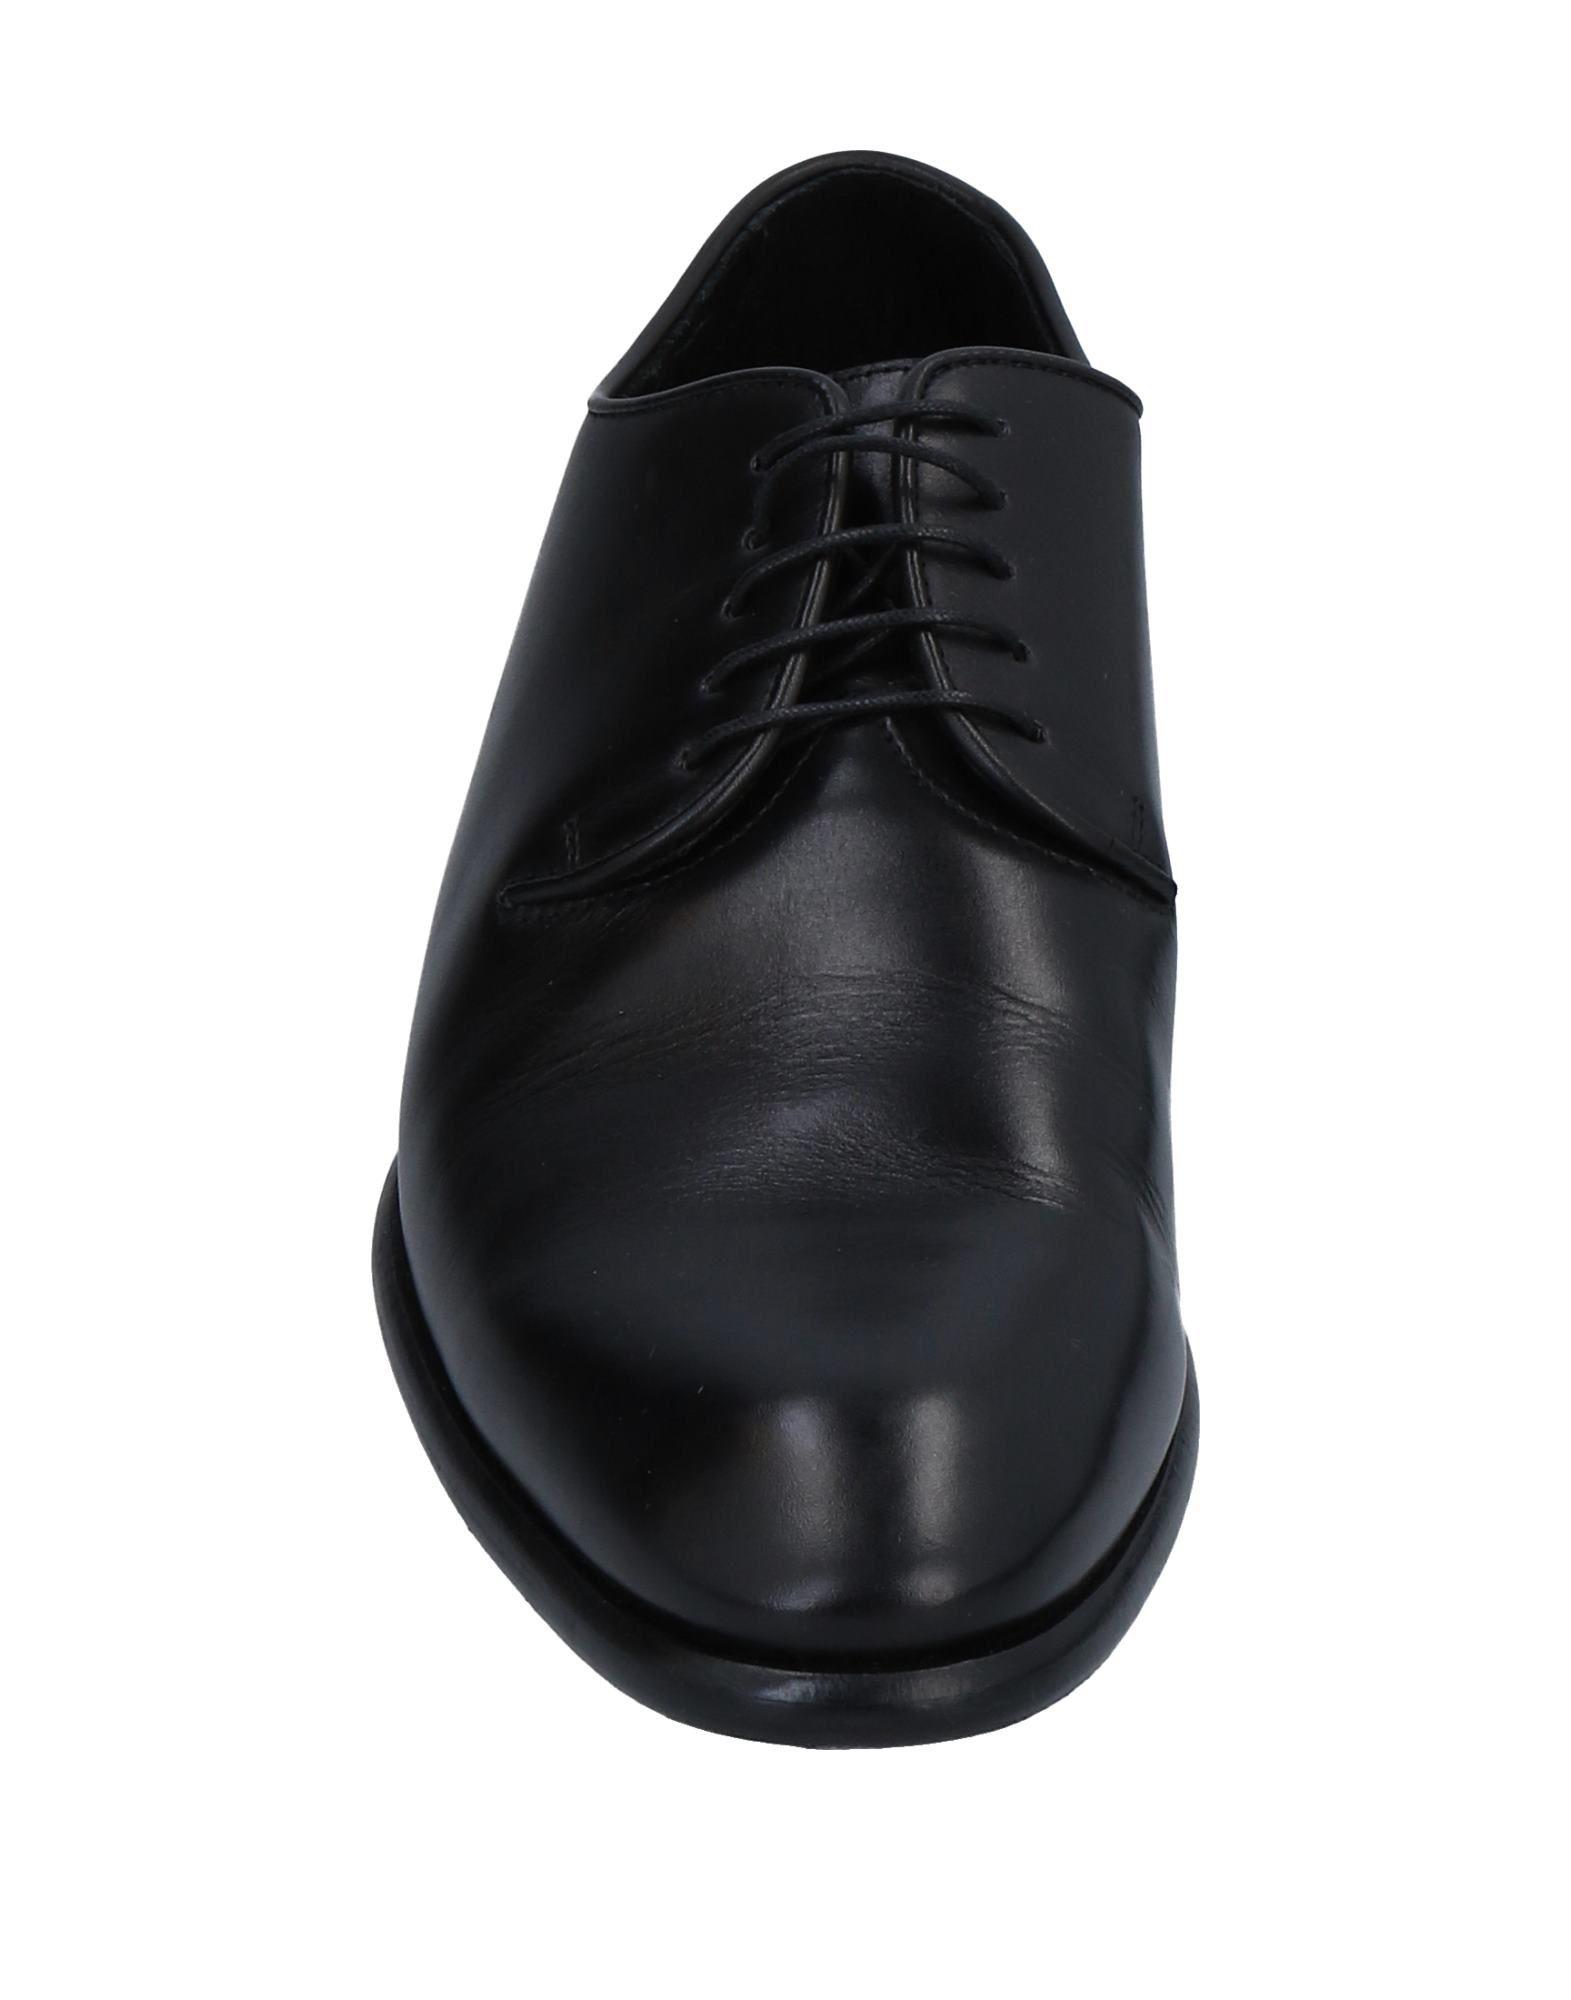 John Varvatos Leather Lace-up Shoe in Black for Men - Lyst